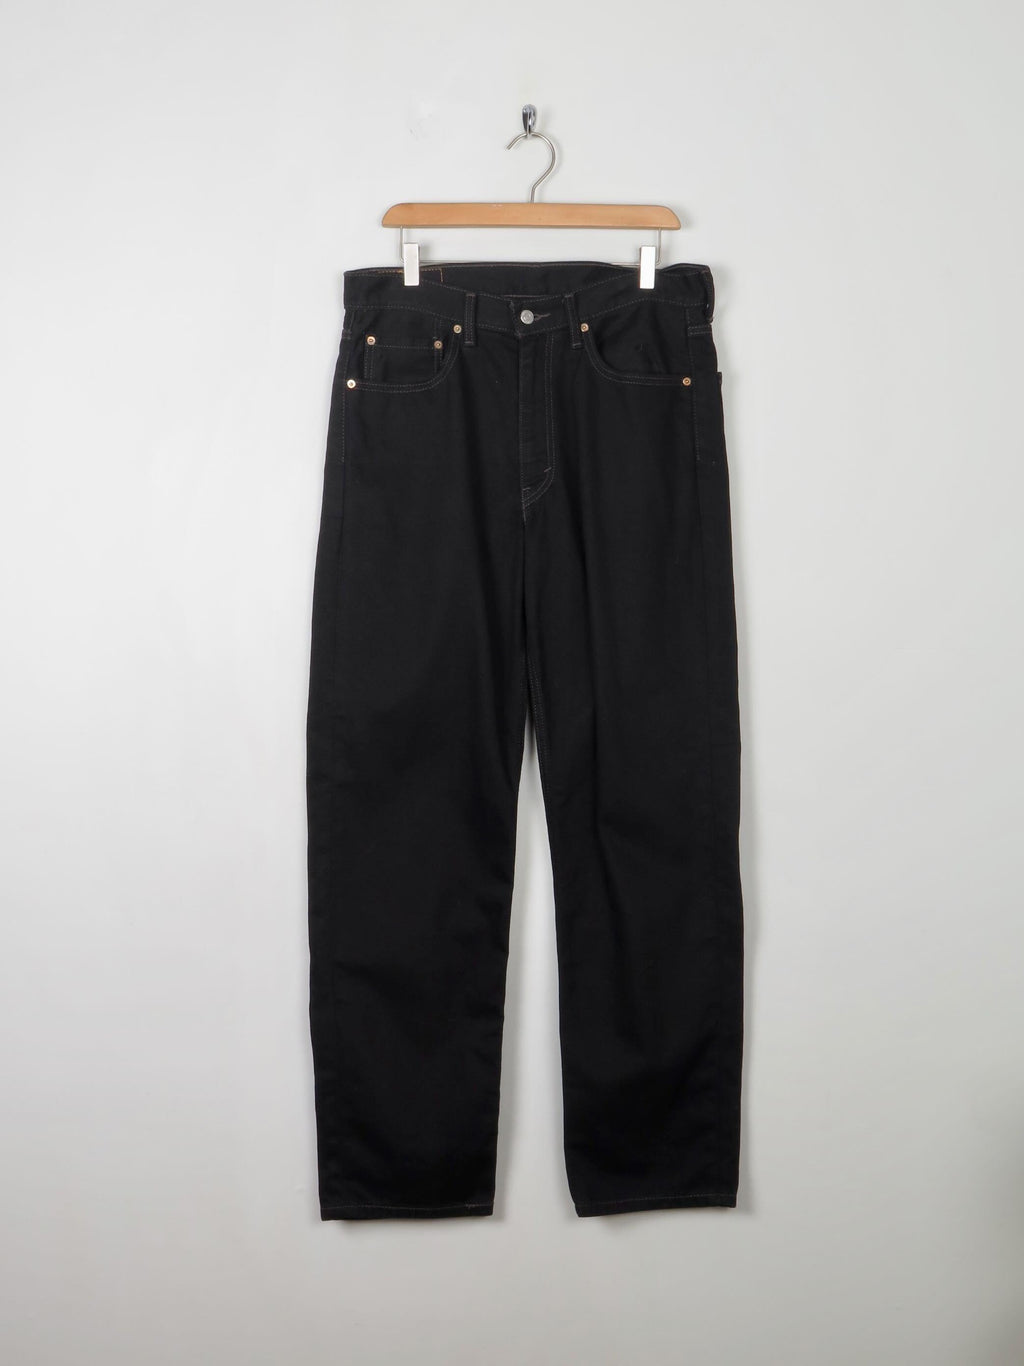 Men's Black Levi's 550 Jeans 33W/32L - The Harlequin